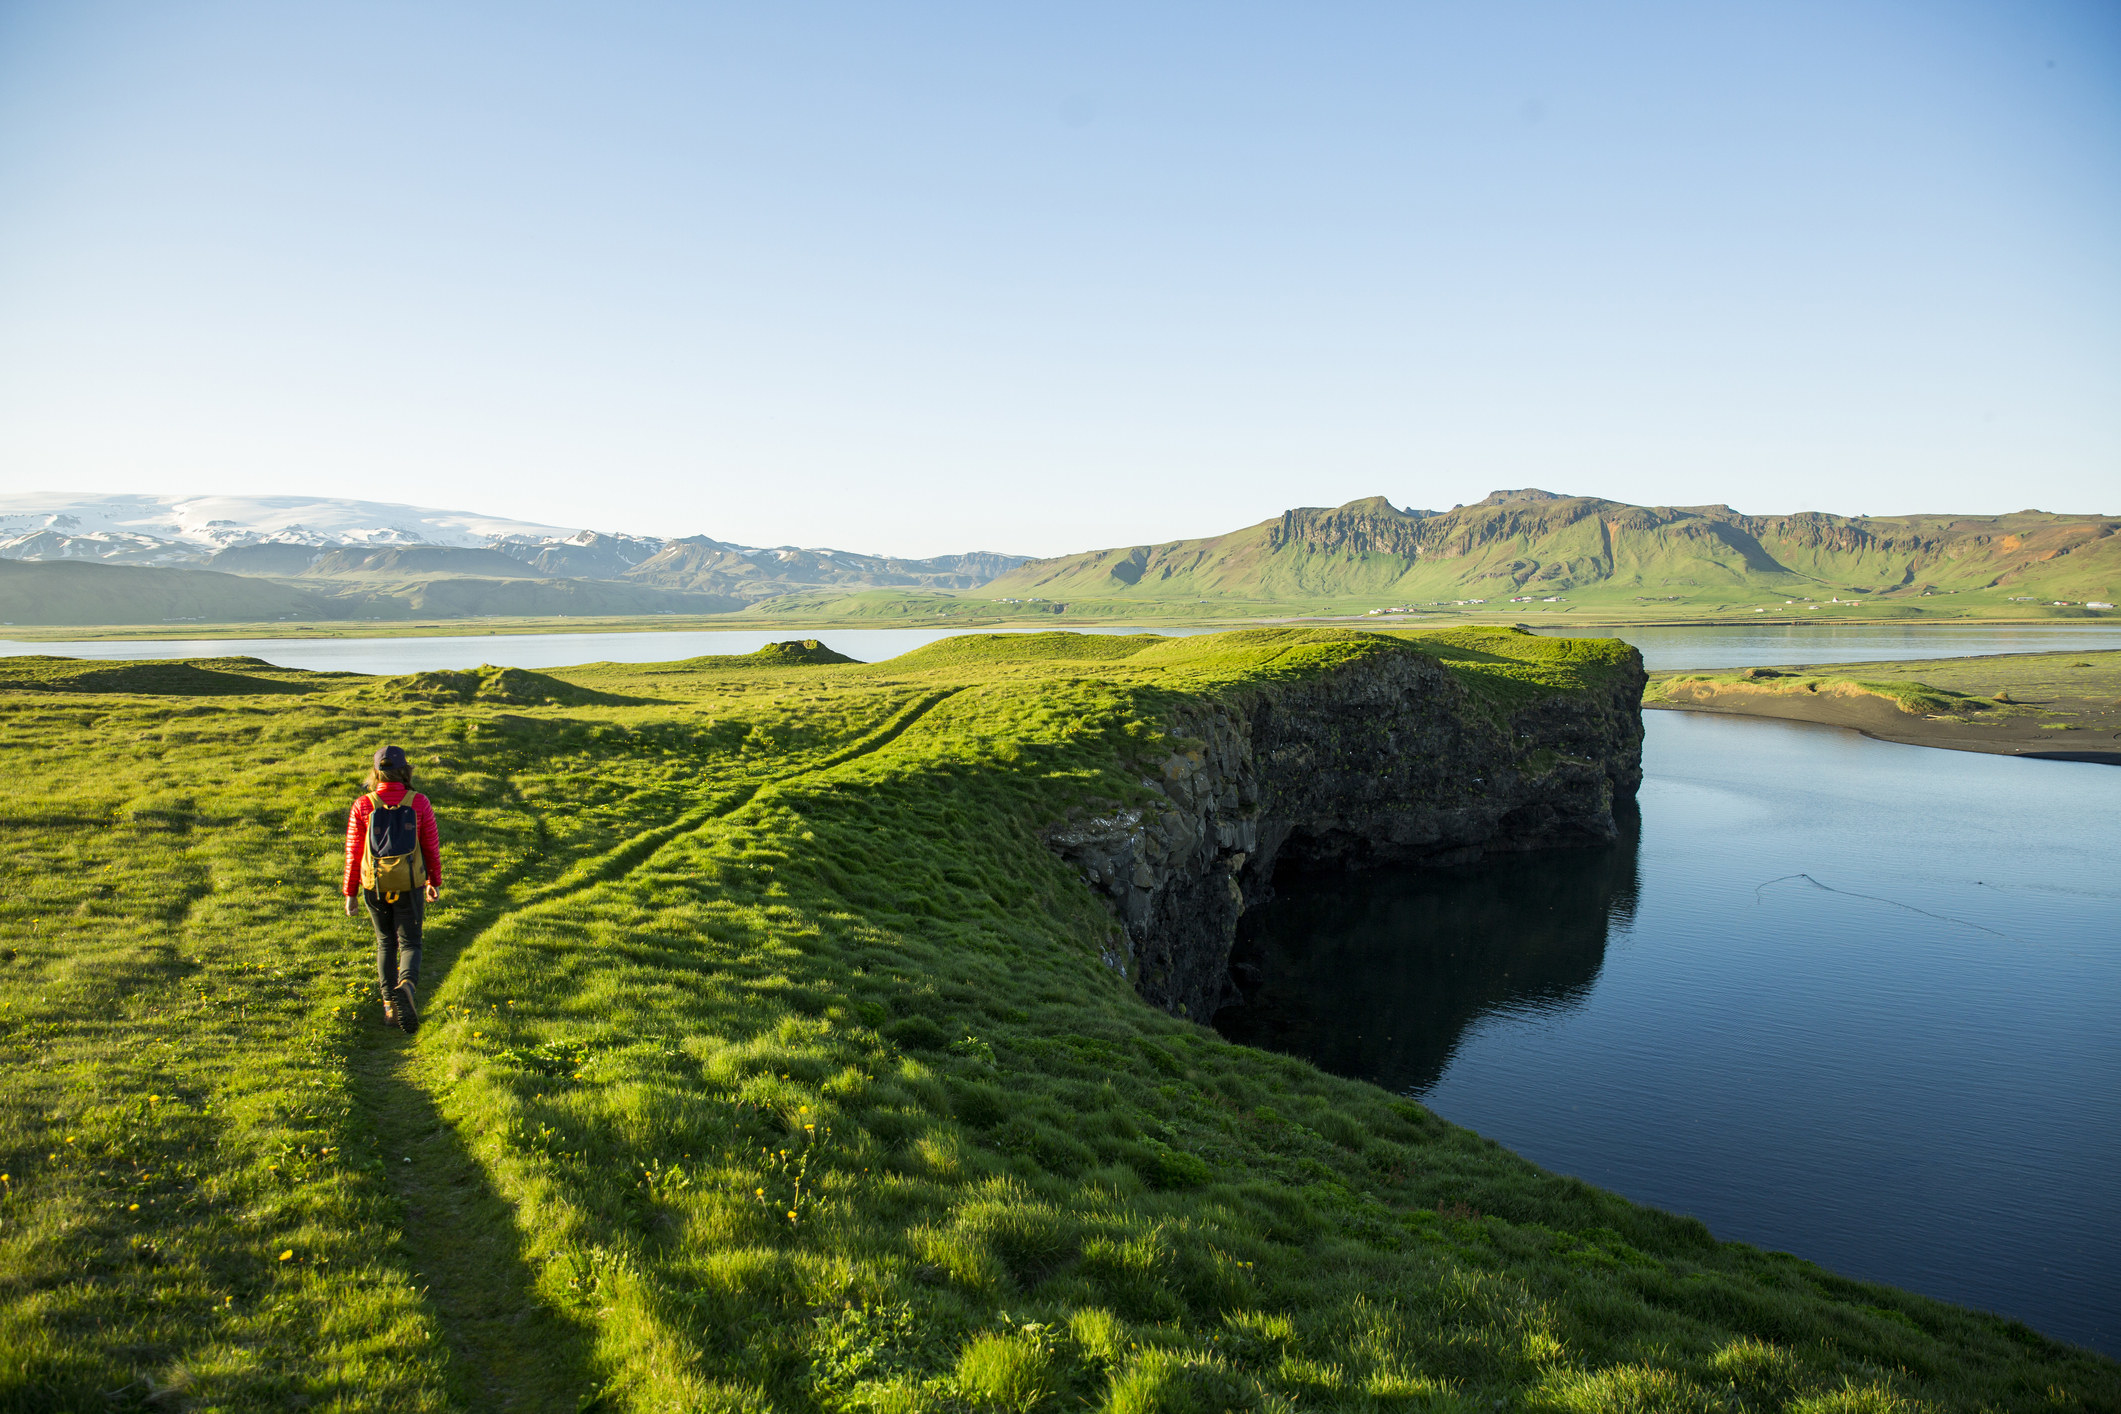 A hiker walking along a grassy path near a lagoon in Iceland